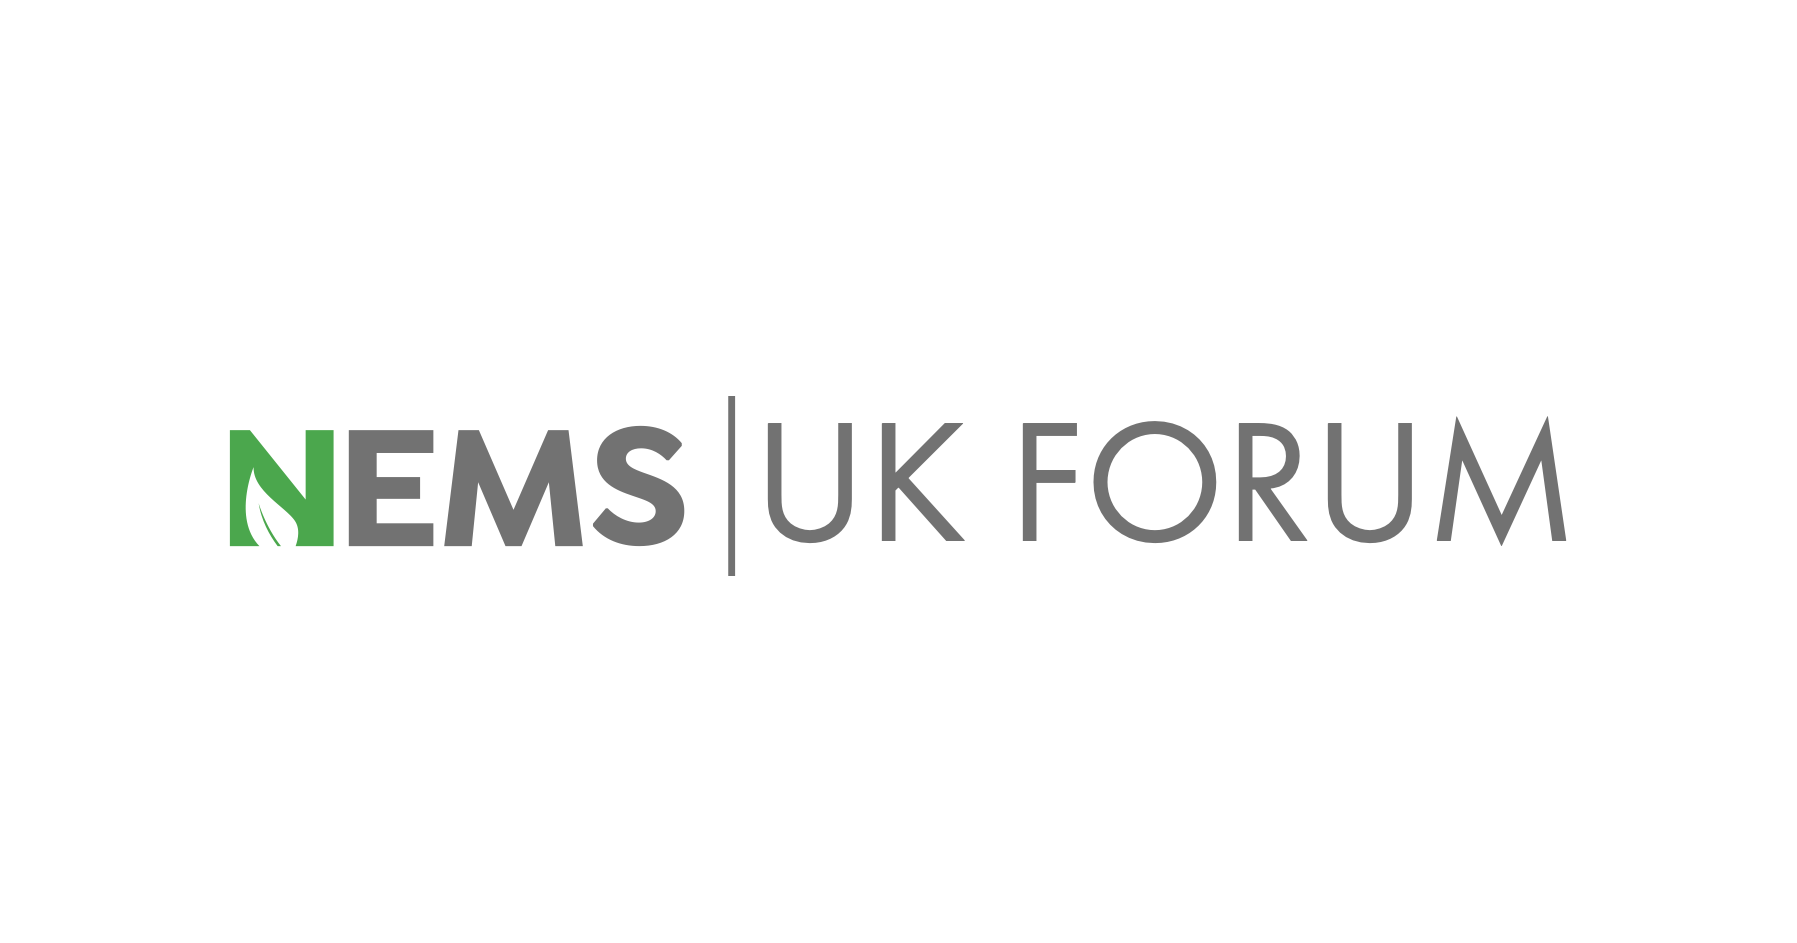 UK Forum 1 - Minutes of Meeting